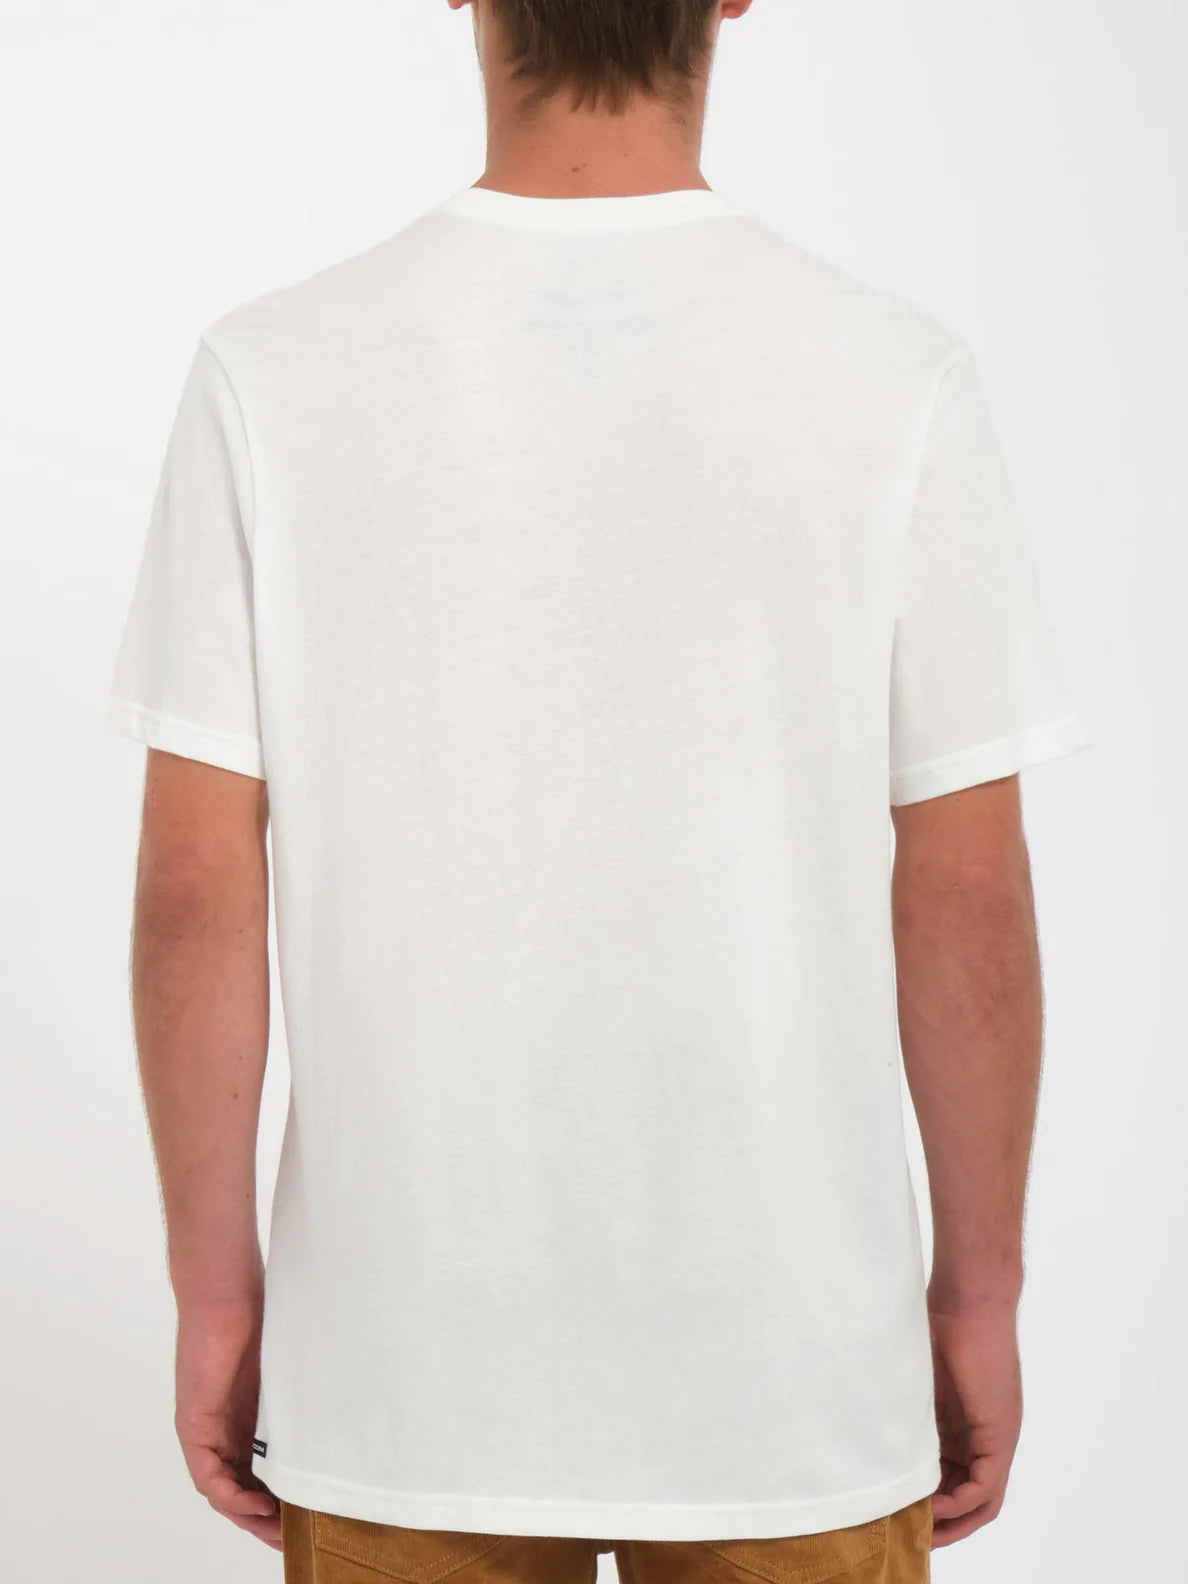 Camiseta Volcom Section Farm To Yarn - Off White | Camisetas de hombre | Camisetas manga corta de hombre | Volcom Shop | surfdevils.com